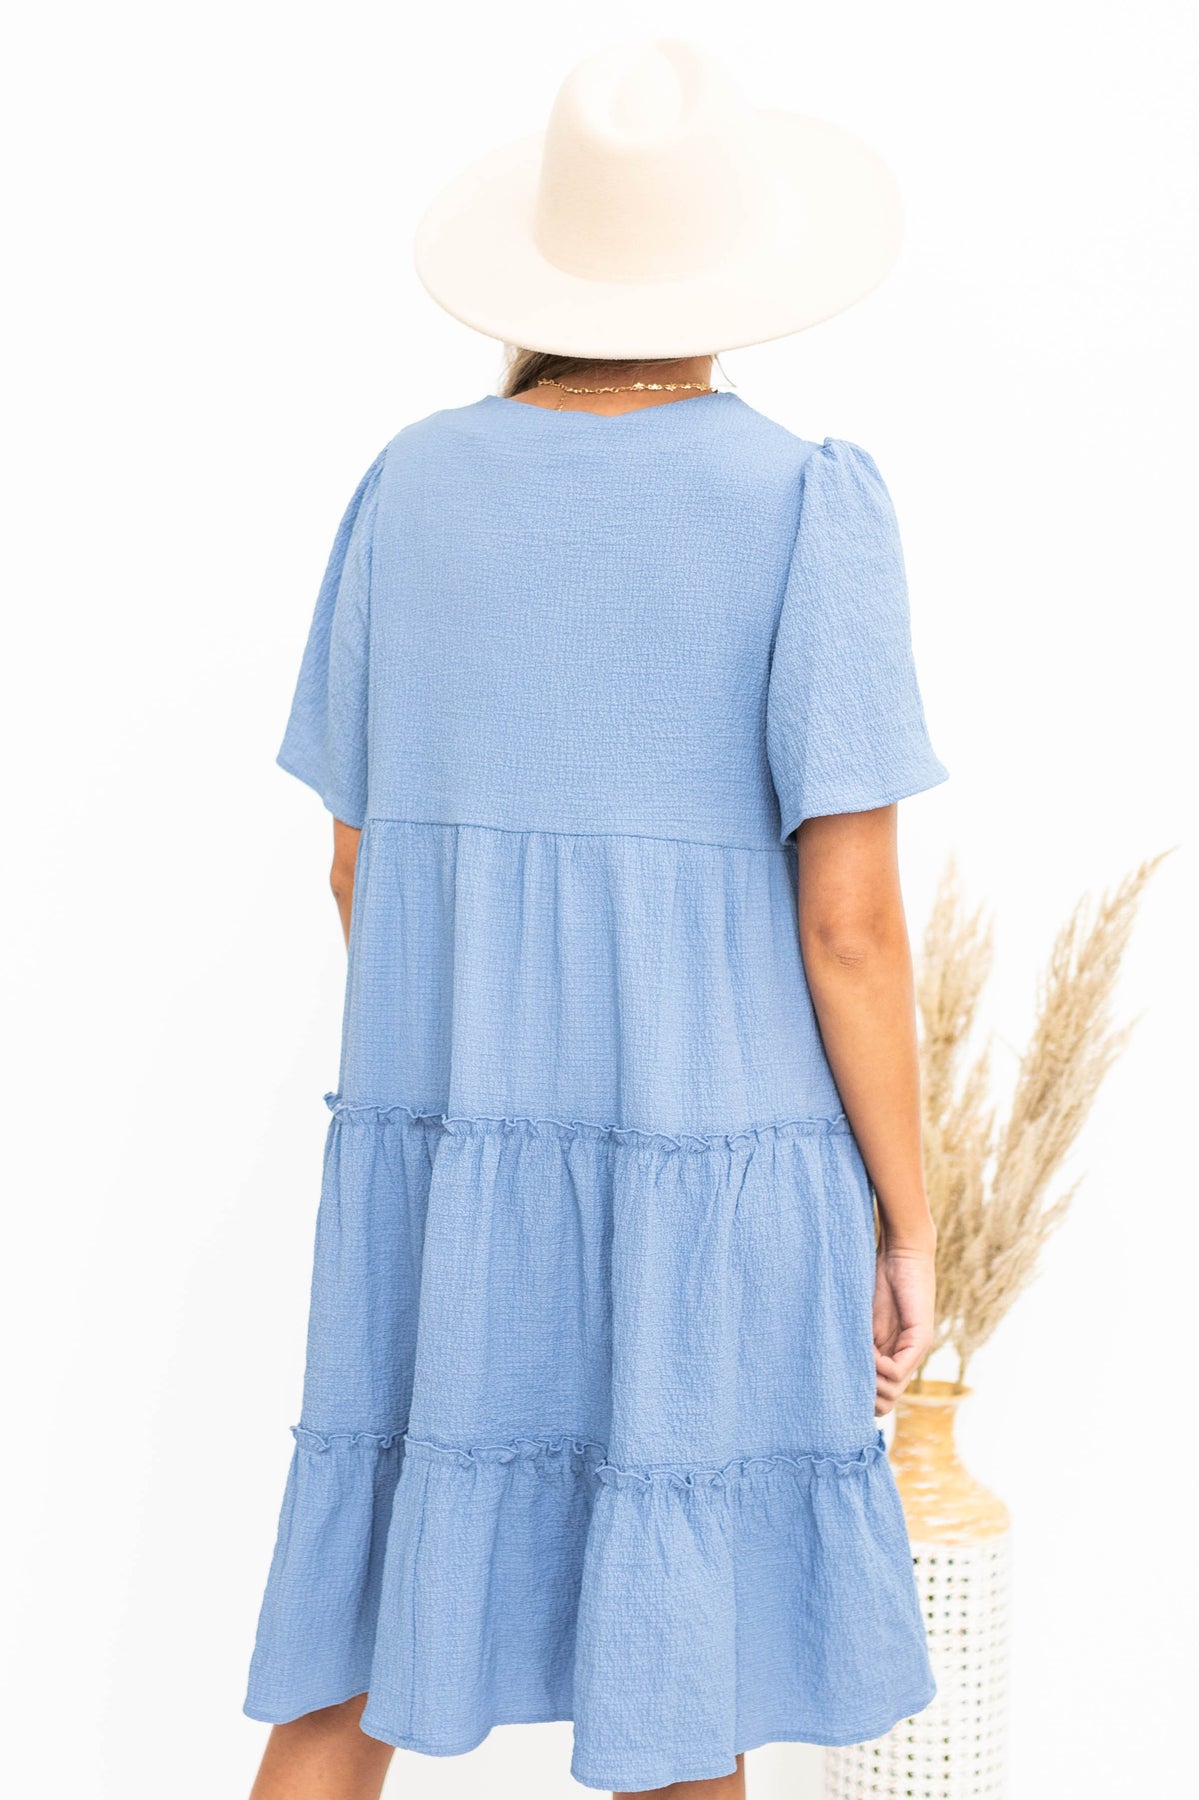 McKenzie Blue Dress Polagram Midi – My Sister's Closet